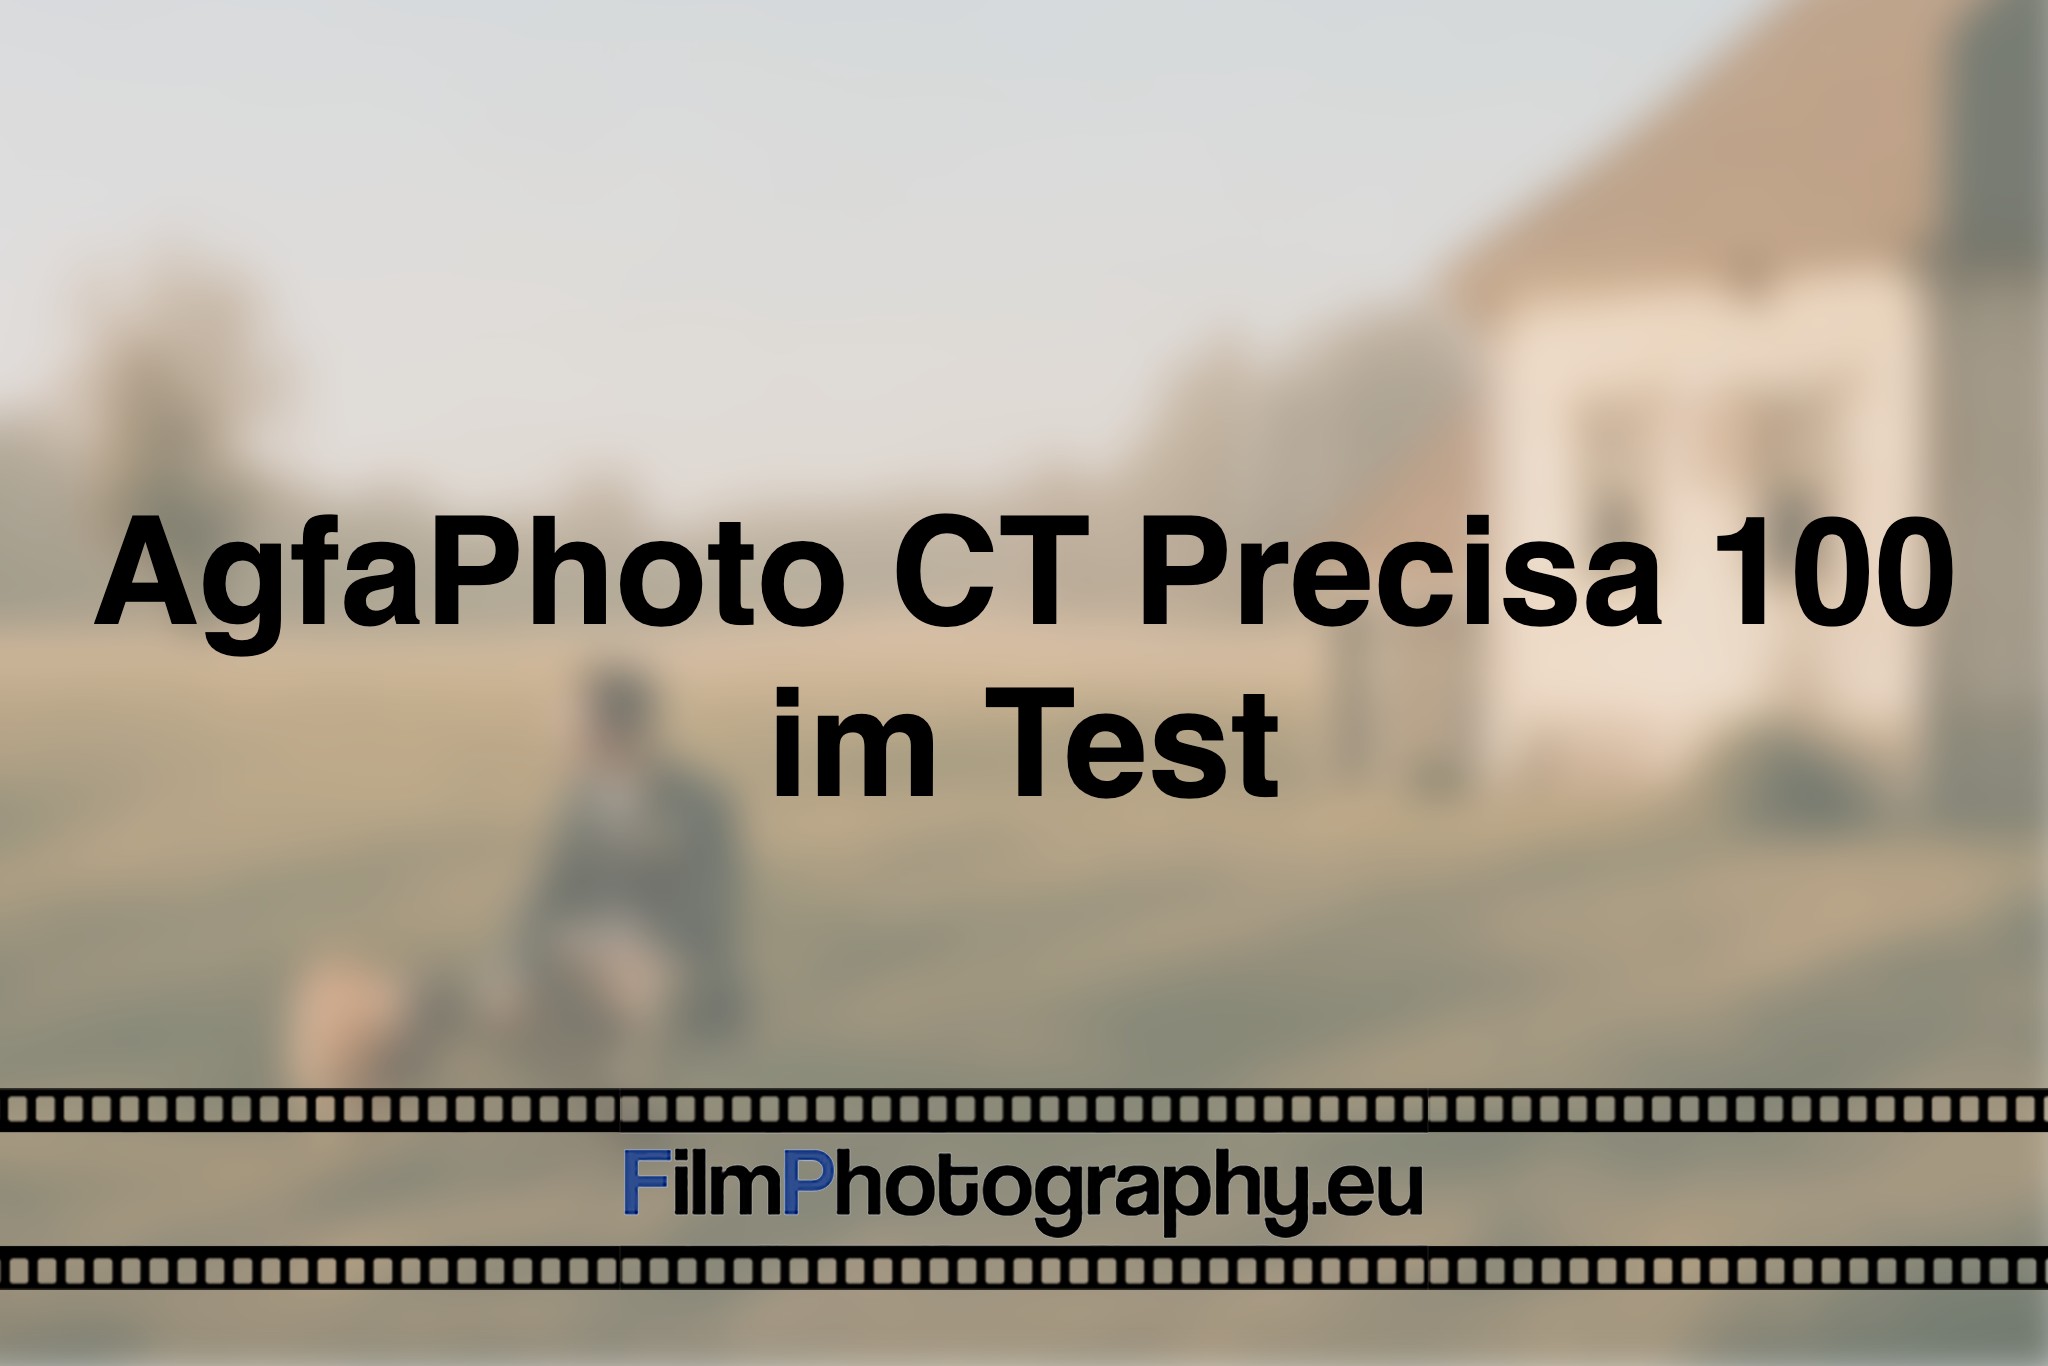 agfaphoto-ct-precisa-100-im-test-photo-bnv